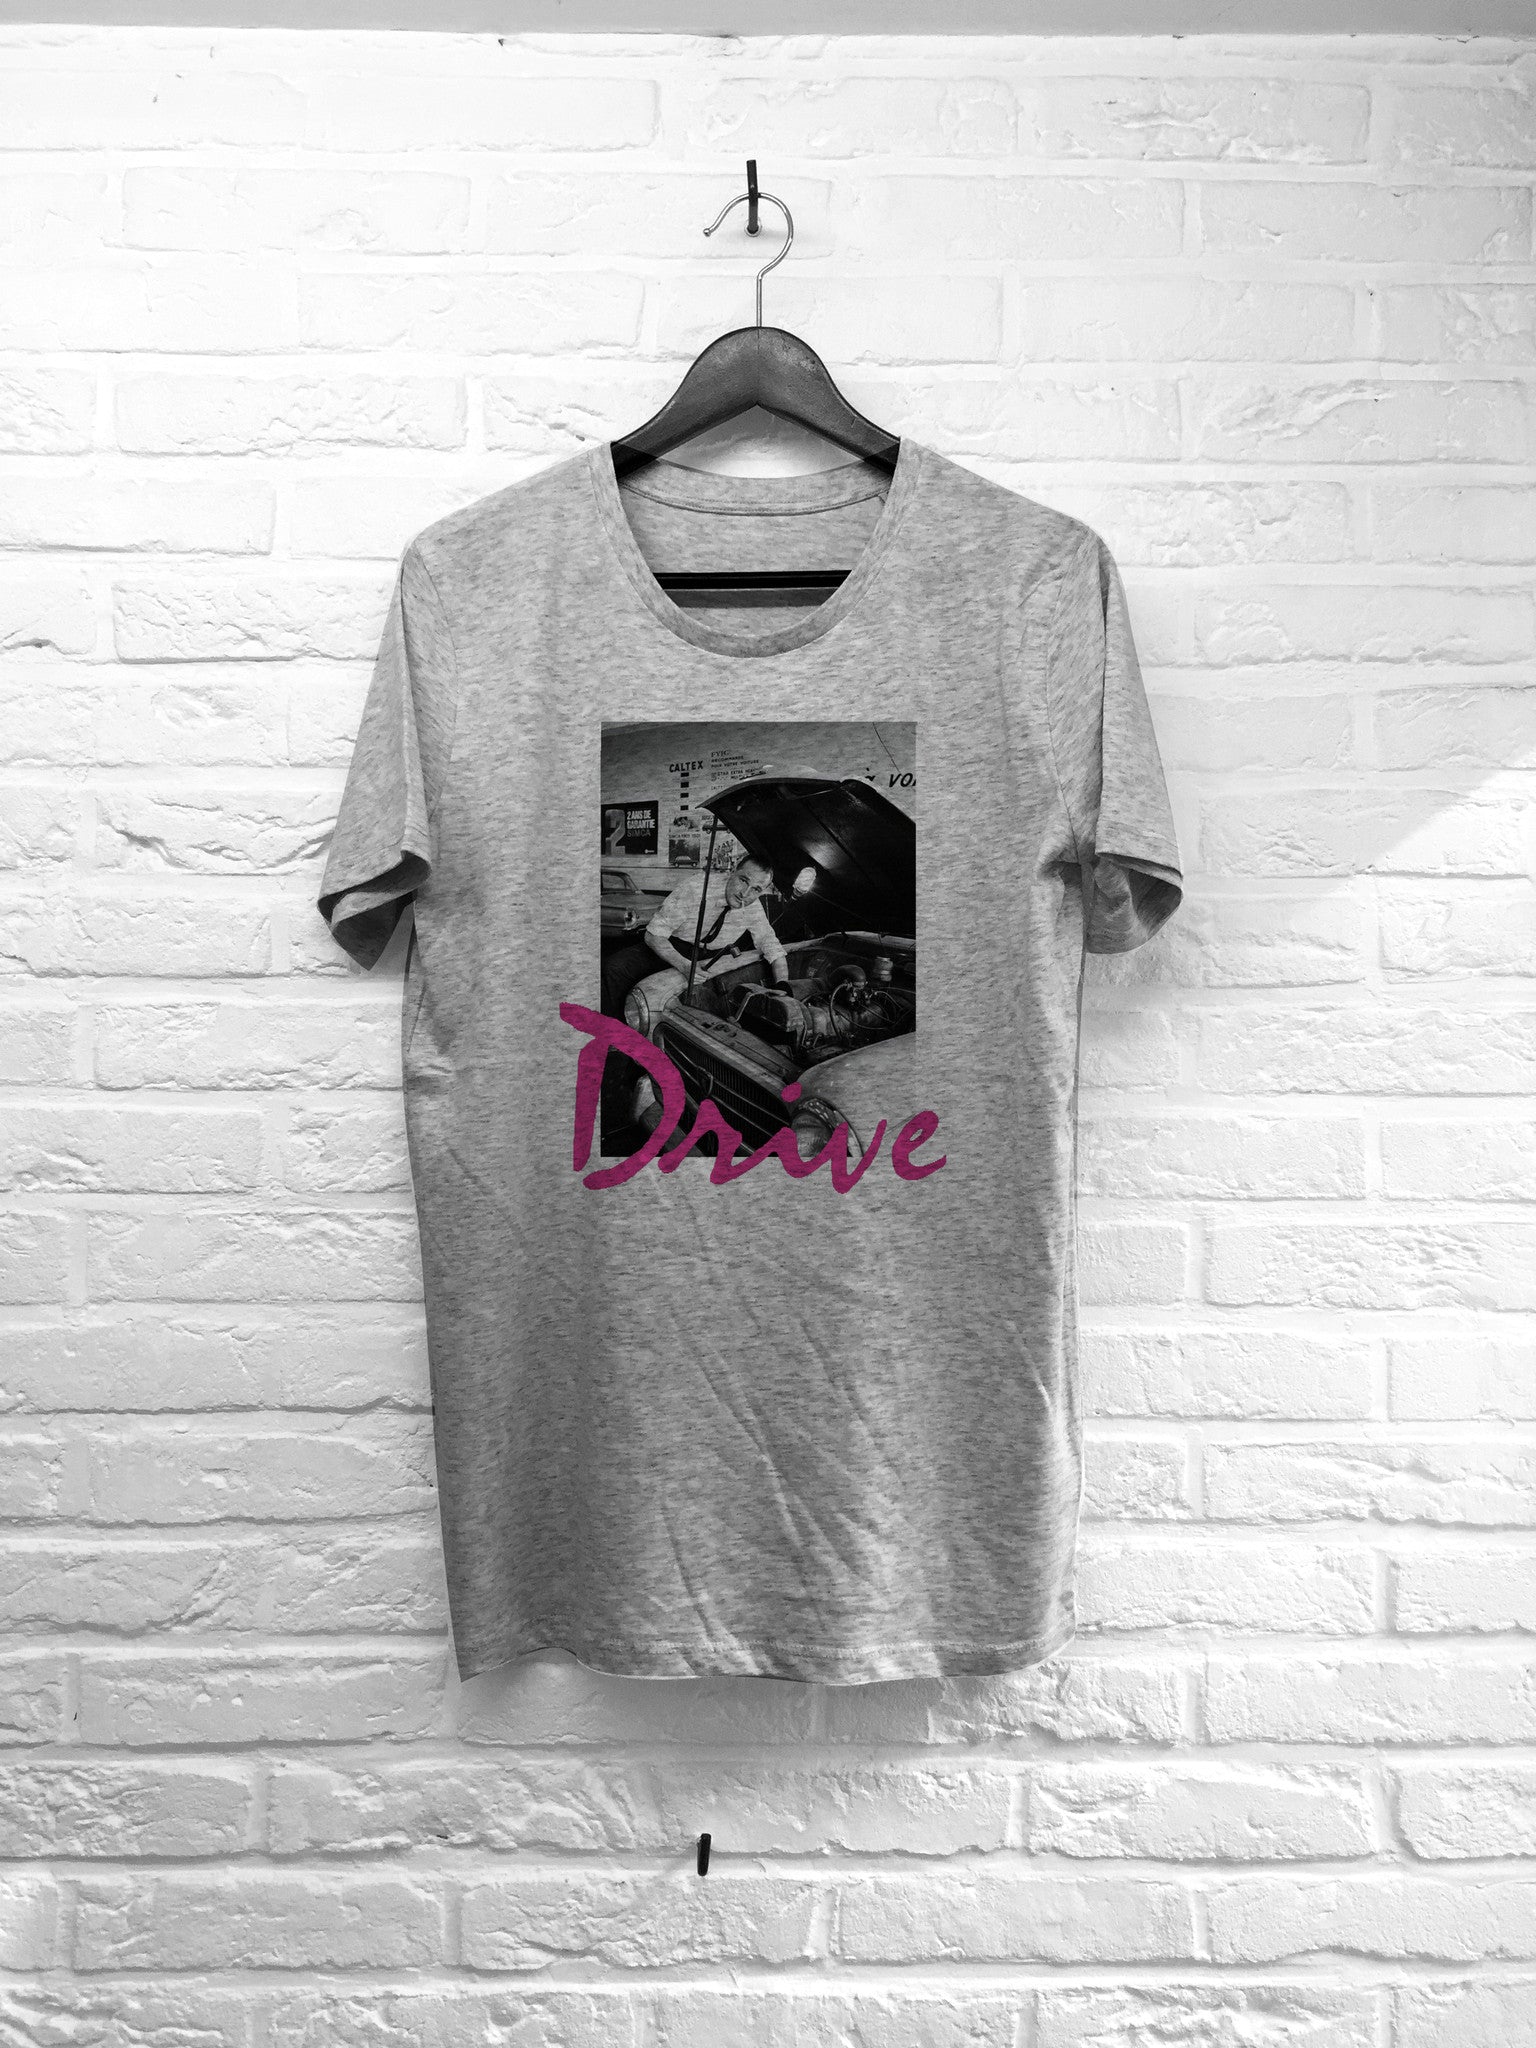 Chirac Drive-T shirt-Atelier Amelot